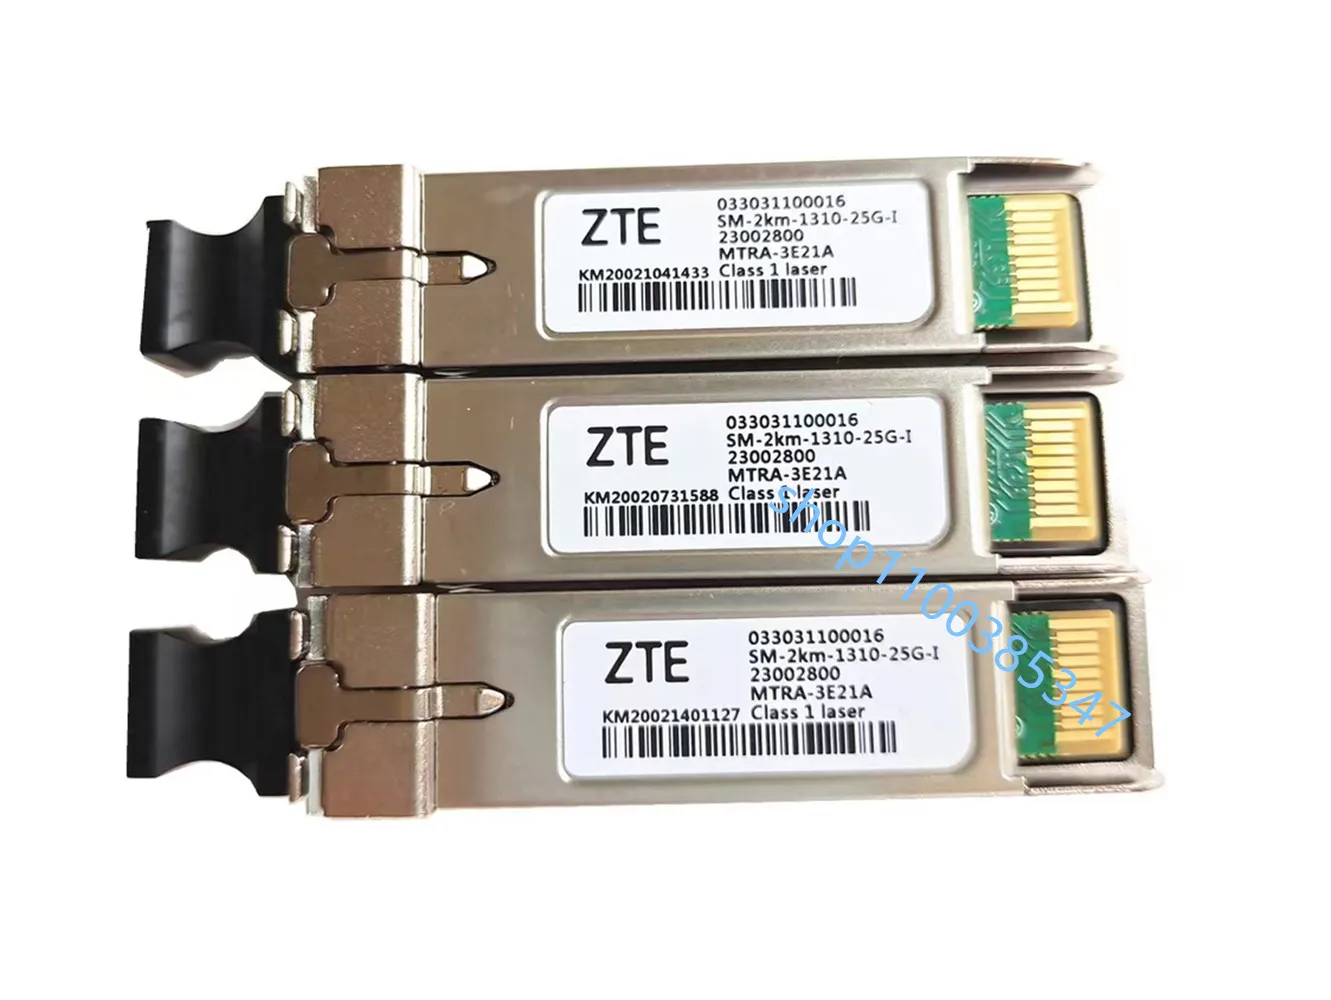 ZTE SM-2km-1310-25G-I MTRA-3E21A QSFP28 033031100016 1310nm Single-Mode LC QSFP Fiber Optical Module Transceiver Original